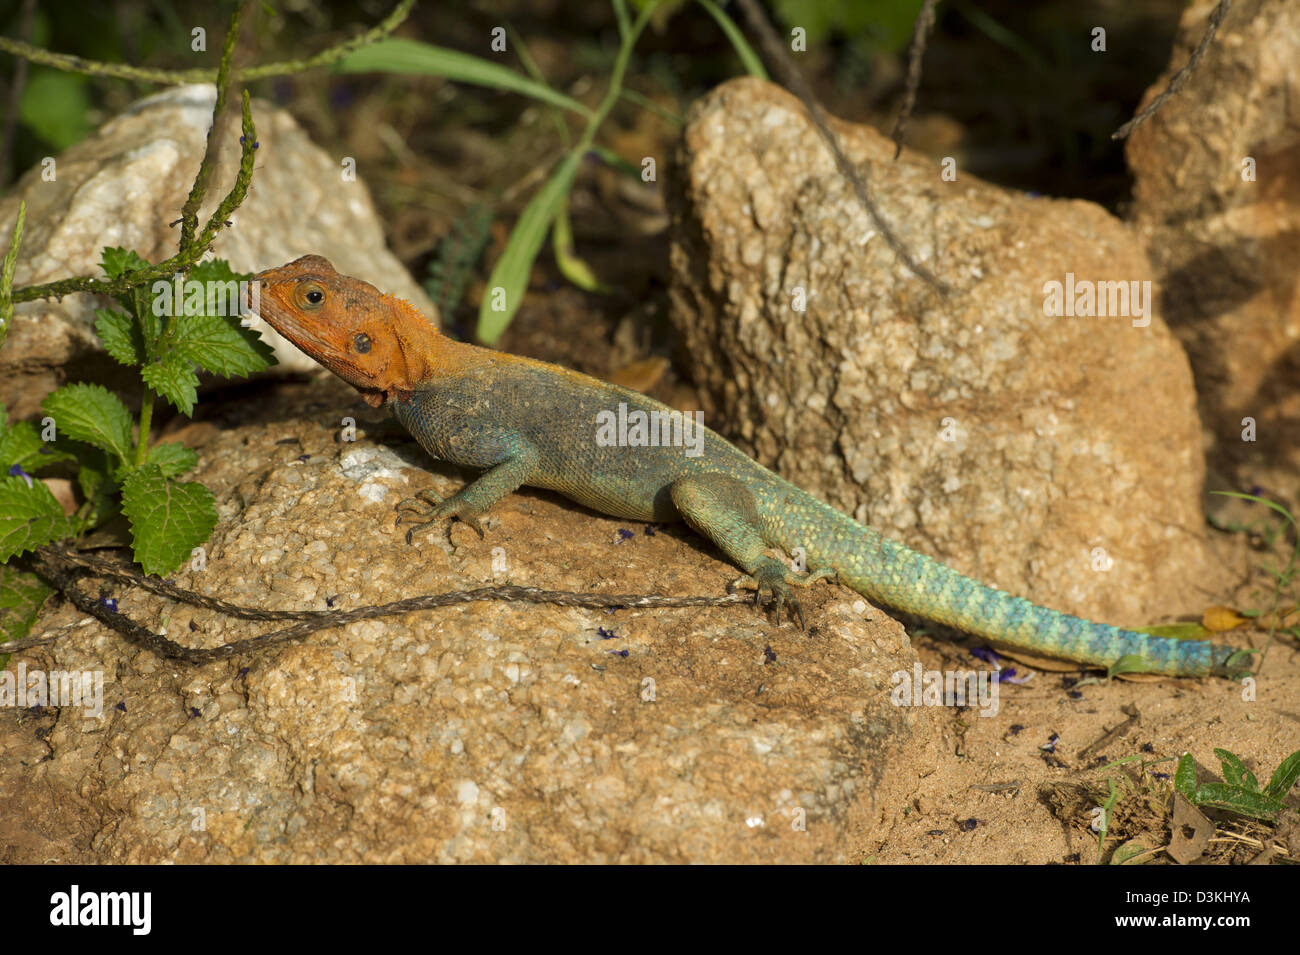 Agama lizard, Taita Hills Wildlife Sanctuary, Kenya Stock Photo